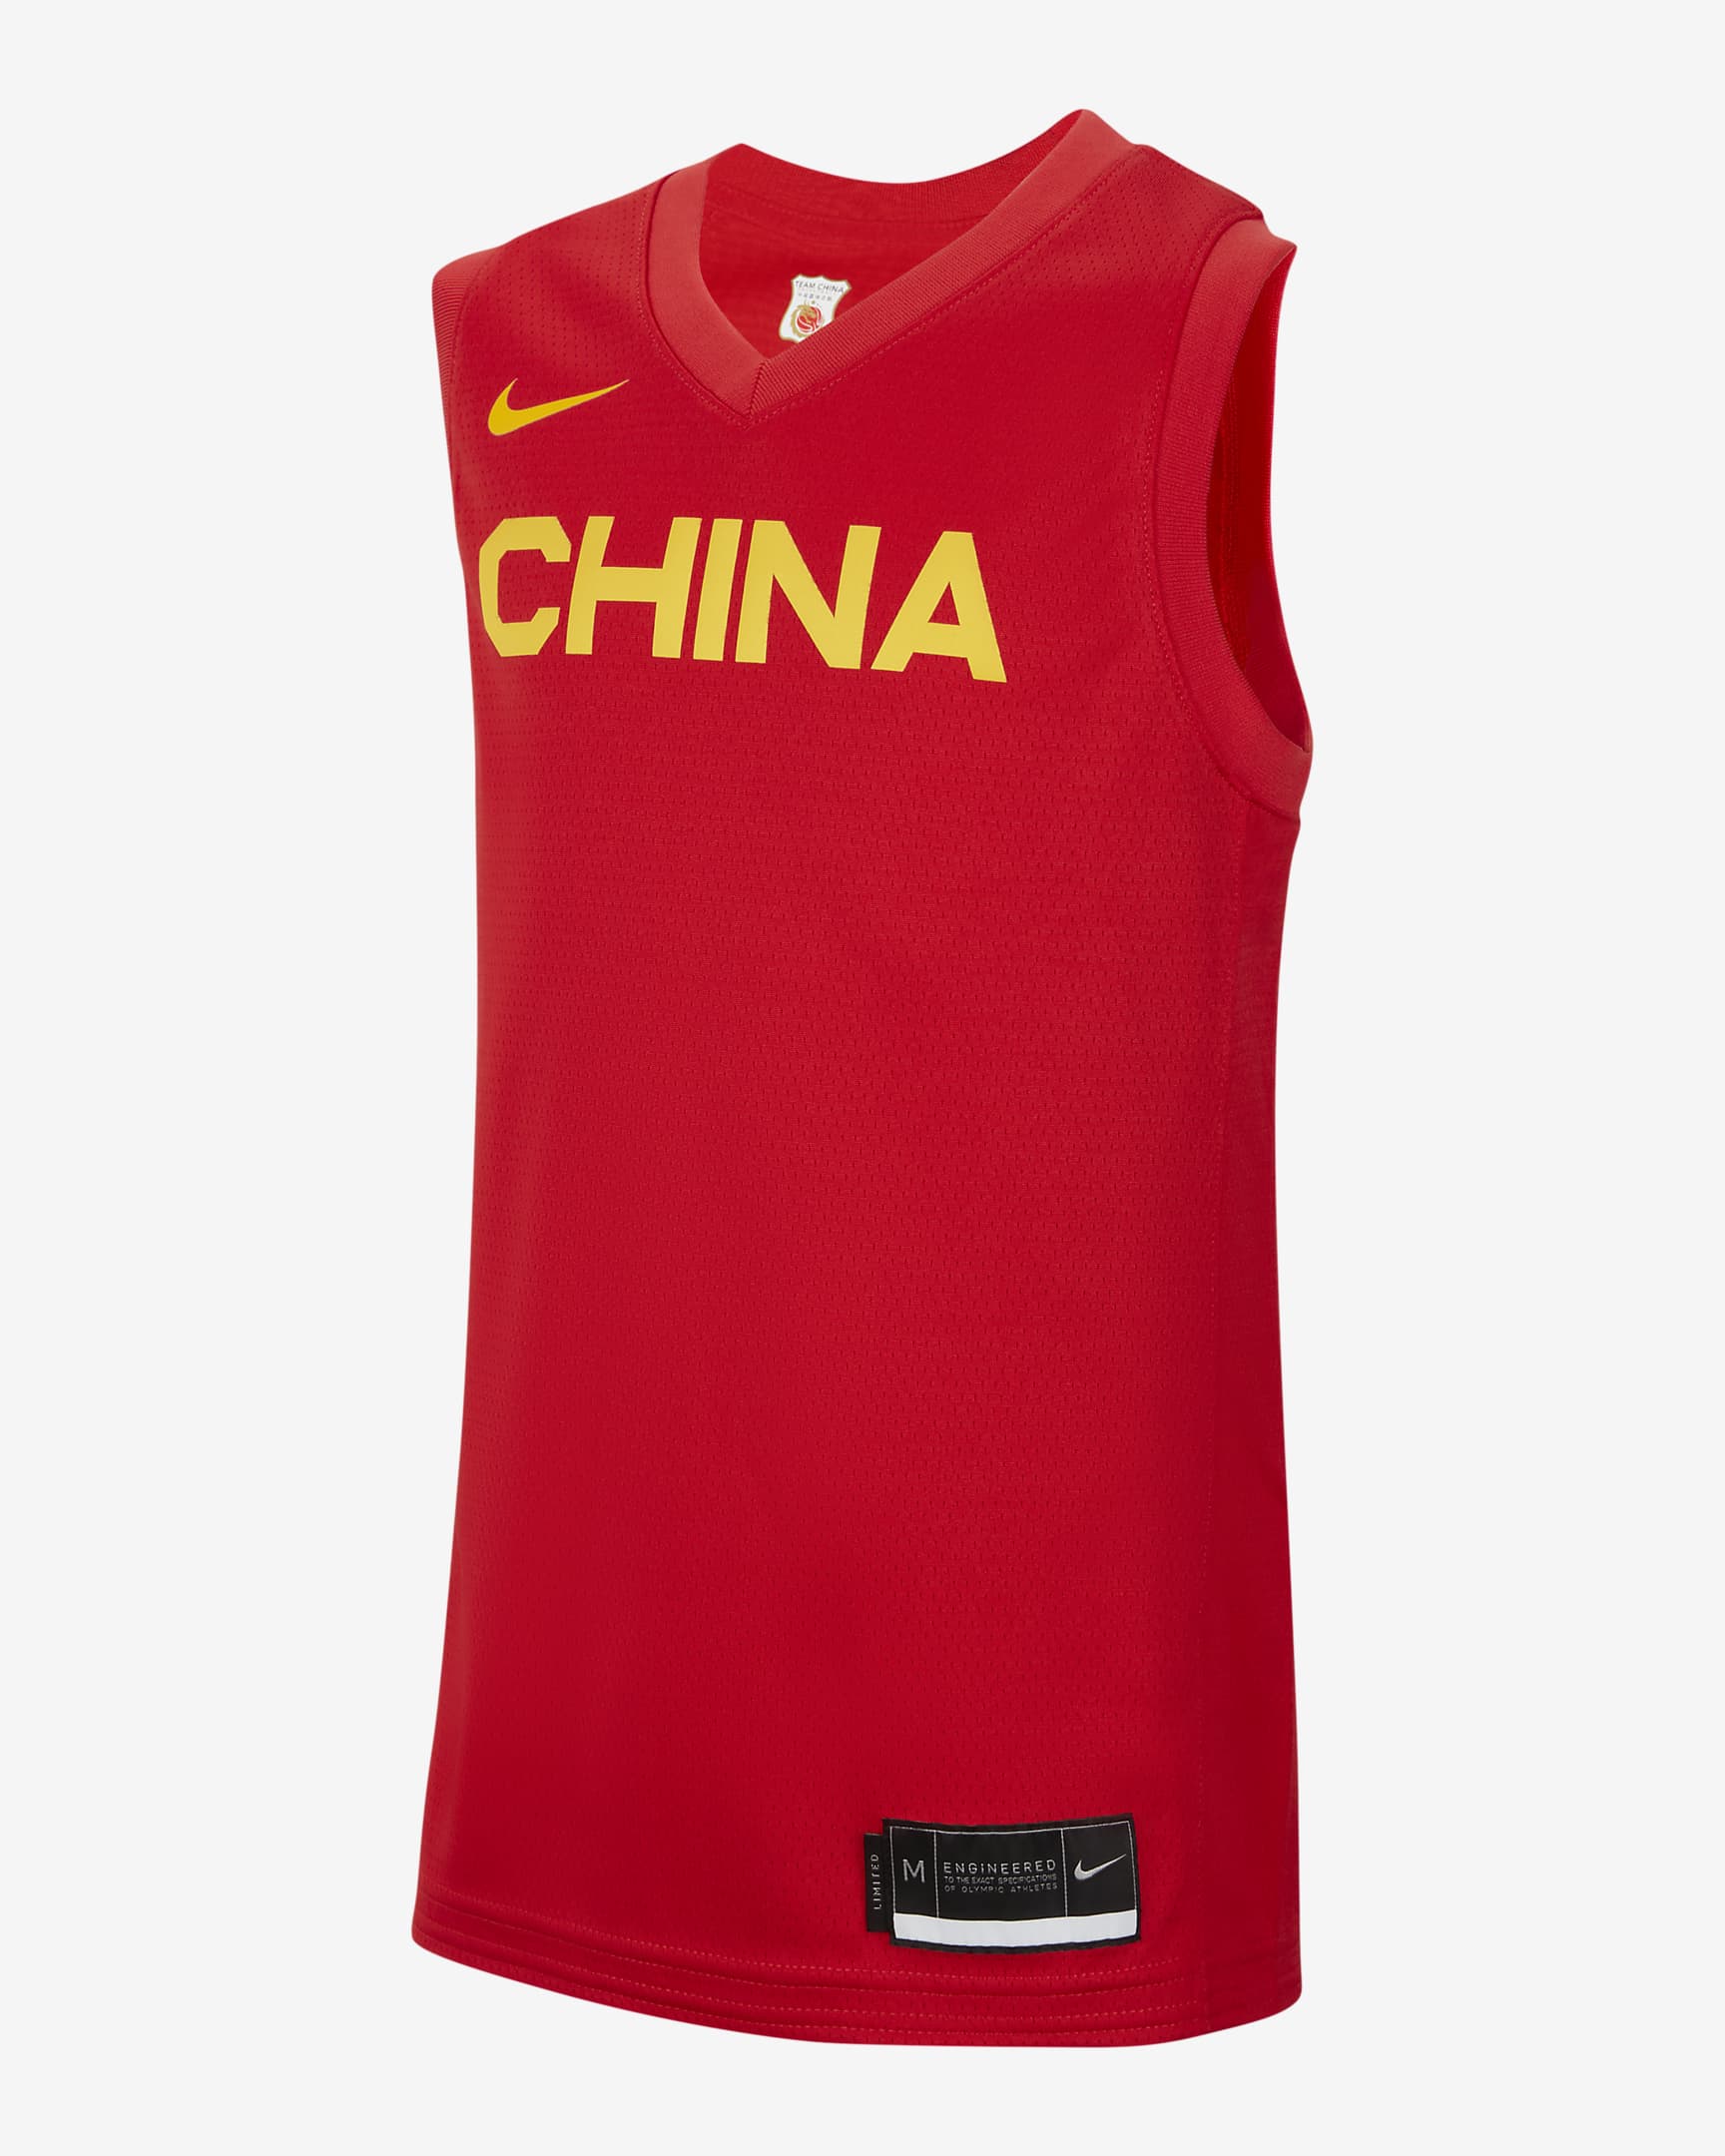 China (Road) Older Kids' Nike Basketball Jersey - Comet Red